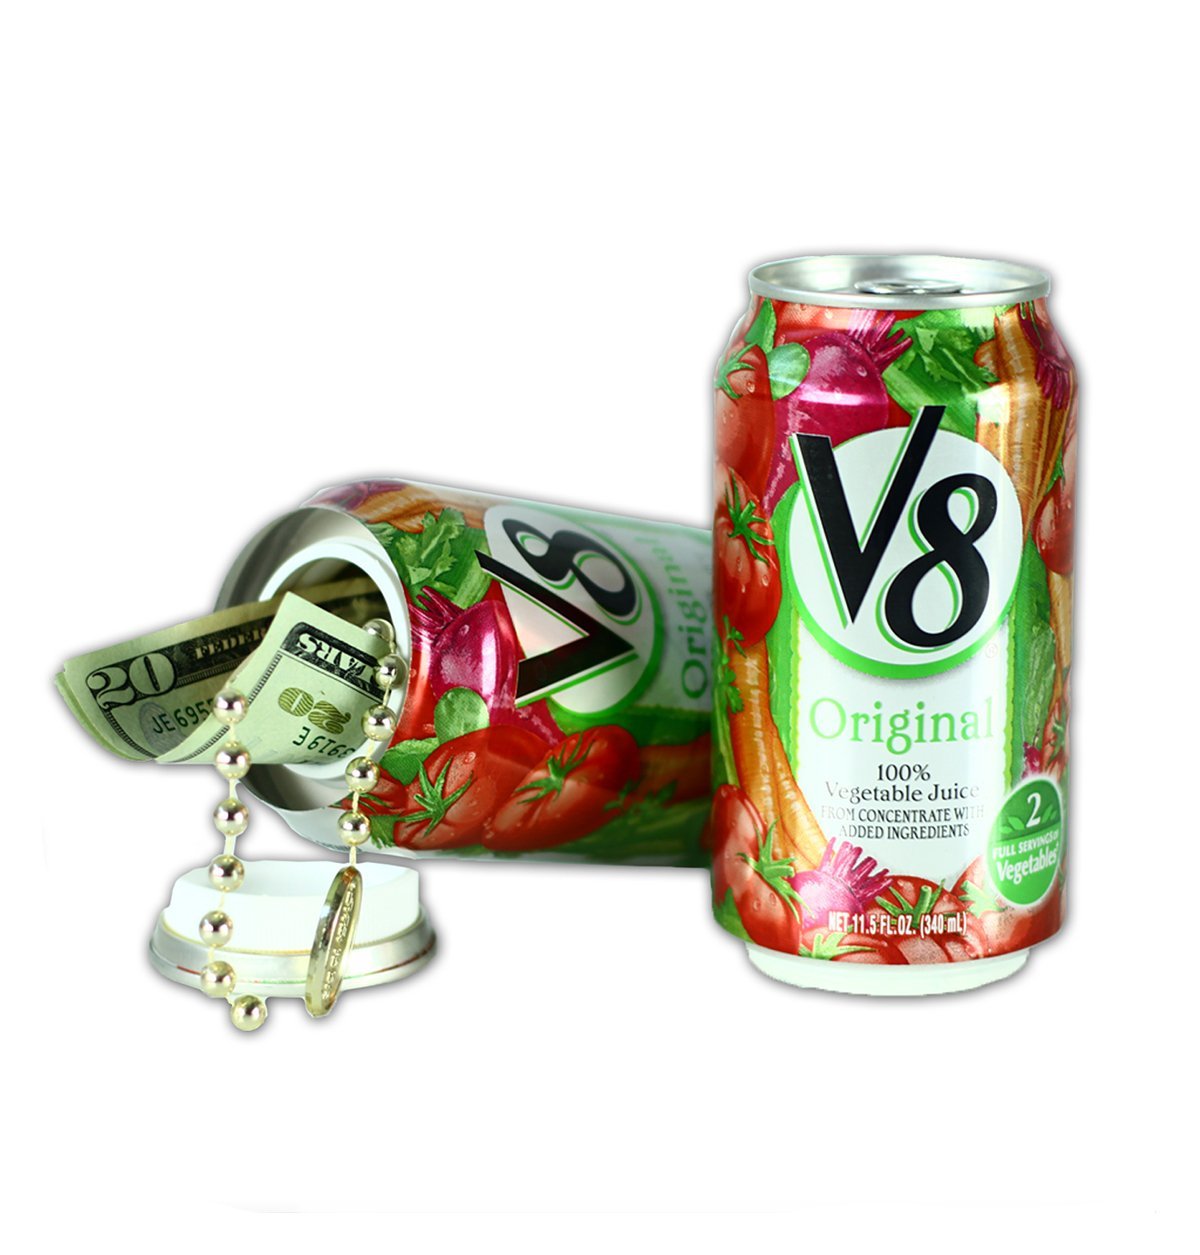 V8 Vegetable Juice Diversion Can Concealment Can Stash Can - Concealment Cans